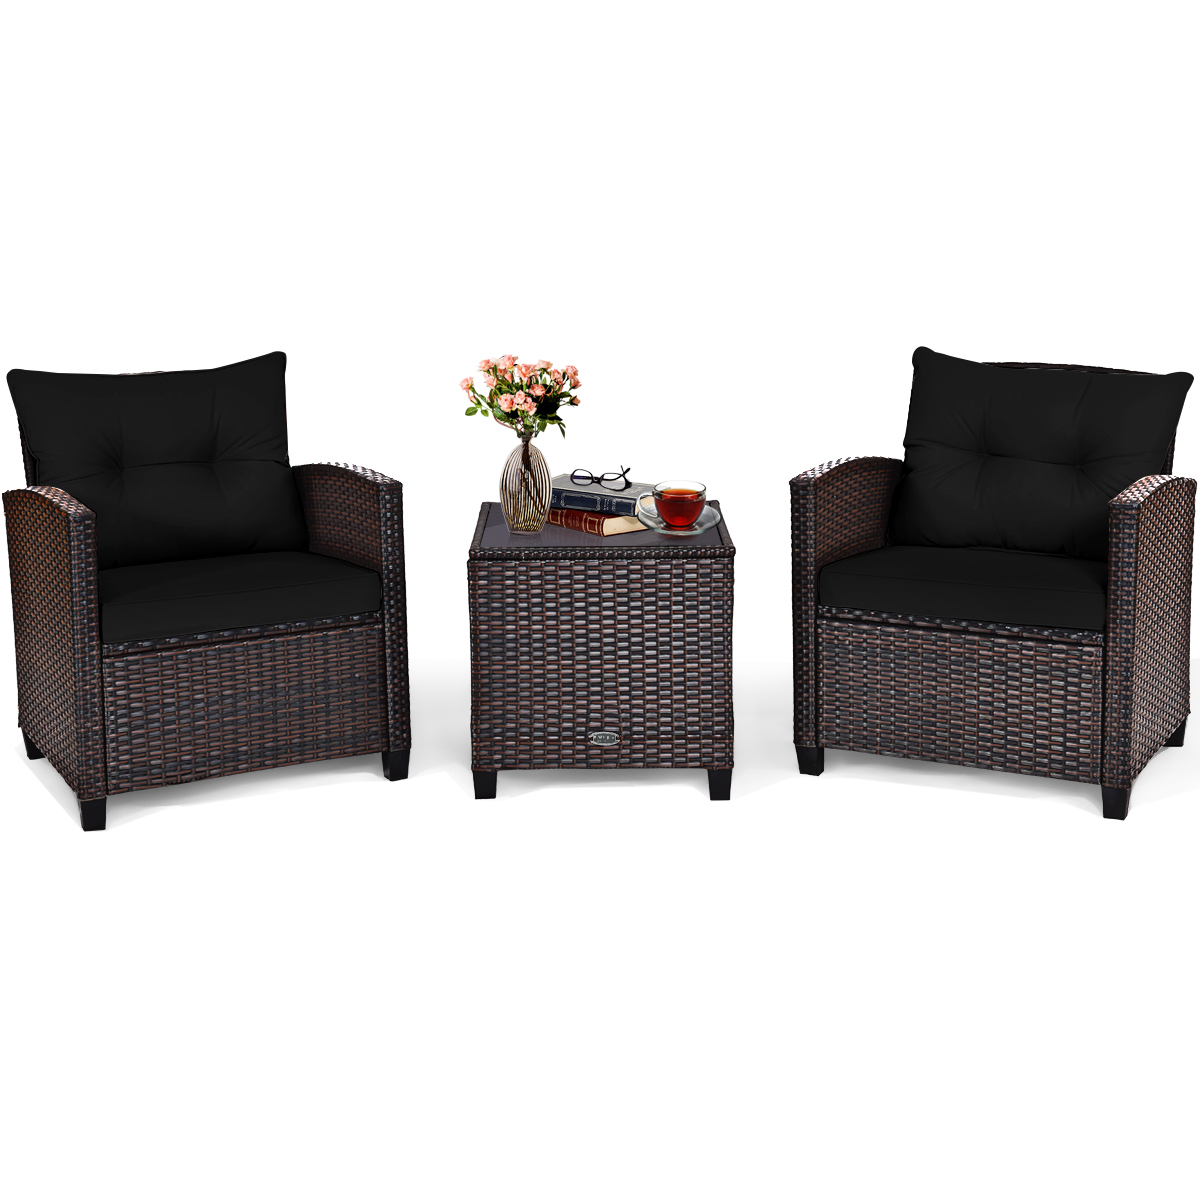 3 Piece Patio Rattan Furniture Set for Porch Balcony Garden Yard-Black